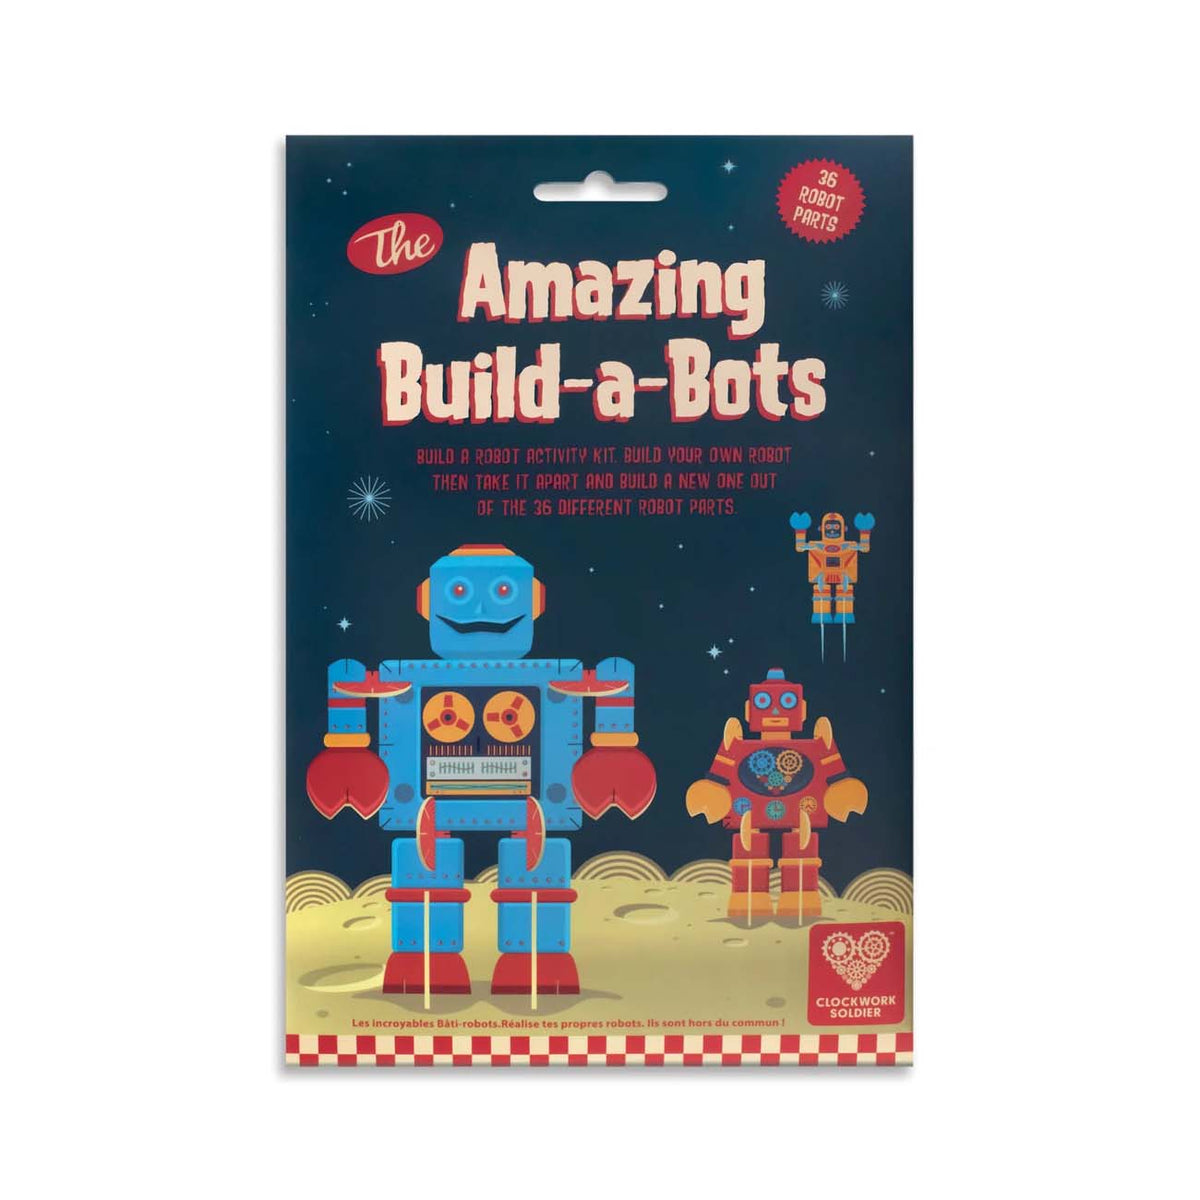 Clockwork Soldier / The Amazing Build-A-Bots